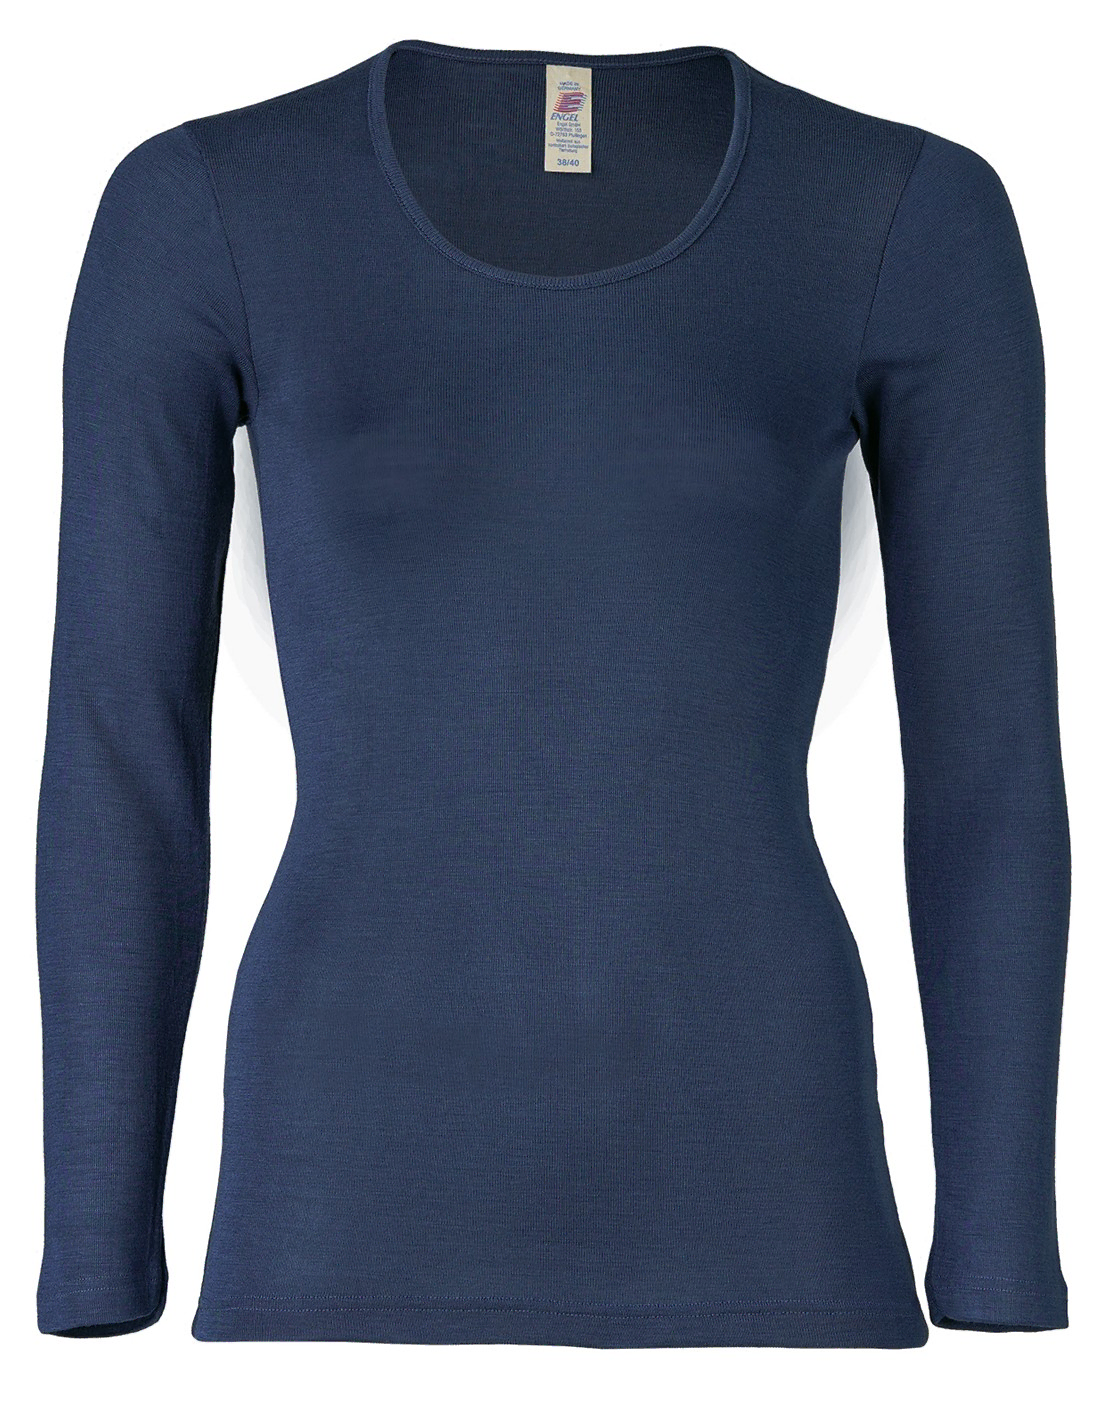 Image of Dames Shirt Lange Mouw Zijde Wol Engel Natur, Kleur Navy blauw, Maat 42/44 - Large